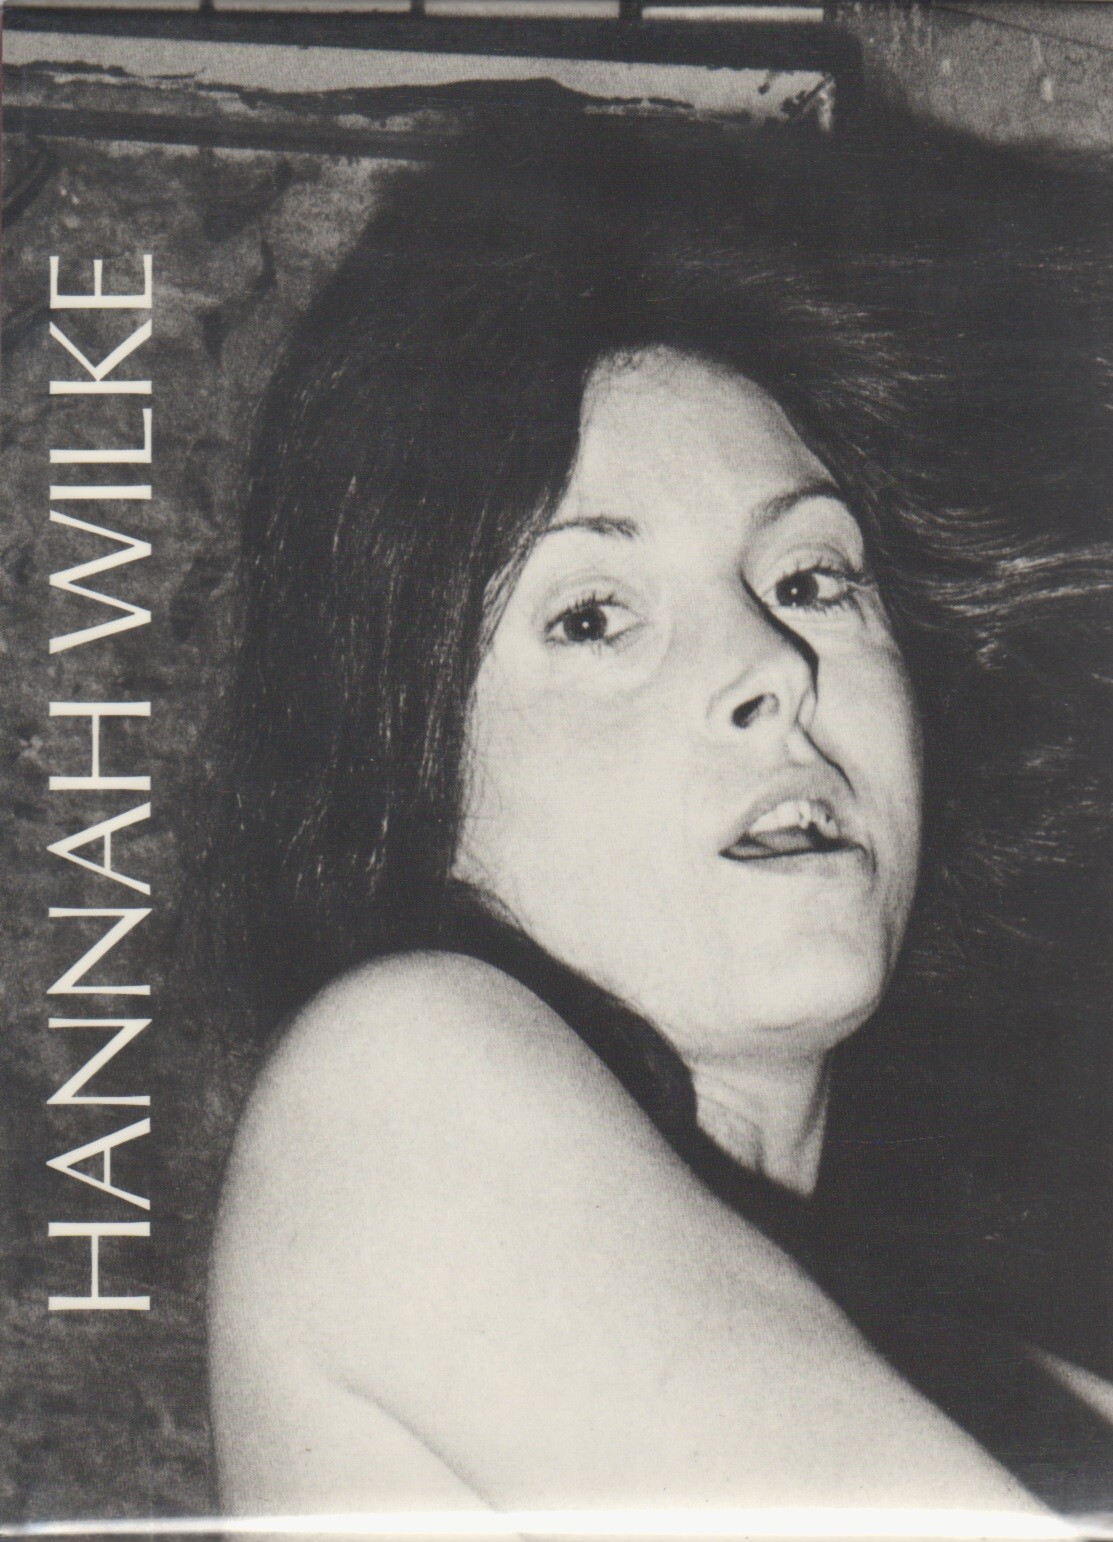 (WILKE, HANNAH). Wilke, Hannah & Joanna Frueh. Thomas H. Kochheiser, Editor - HANNAH WILKE